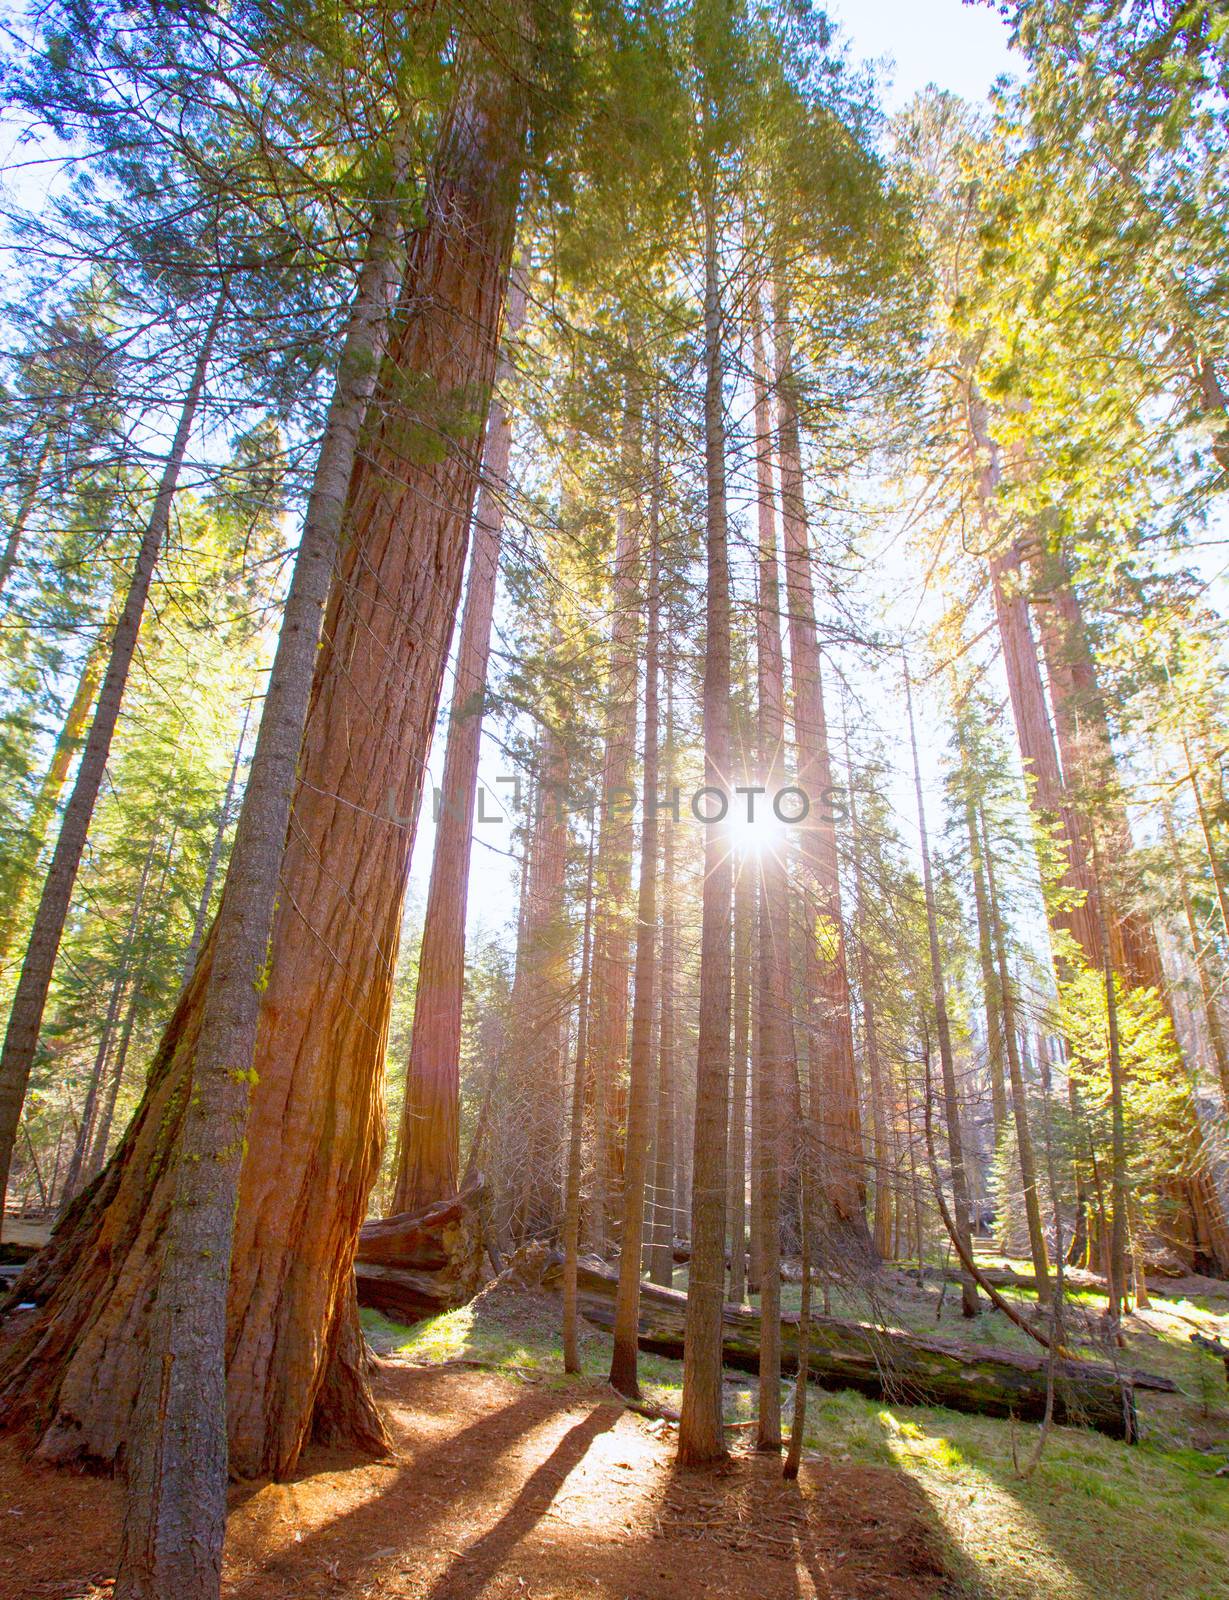 Sequoias in Mariposa grove at Yosemite National Park by lunamarina